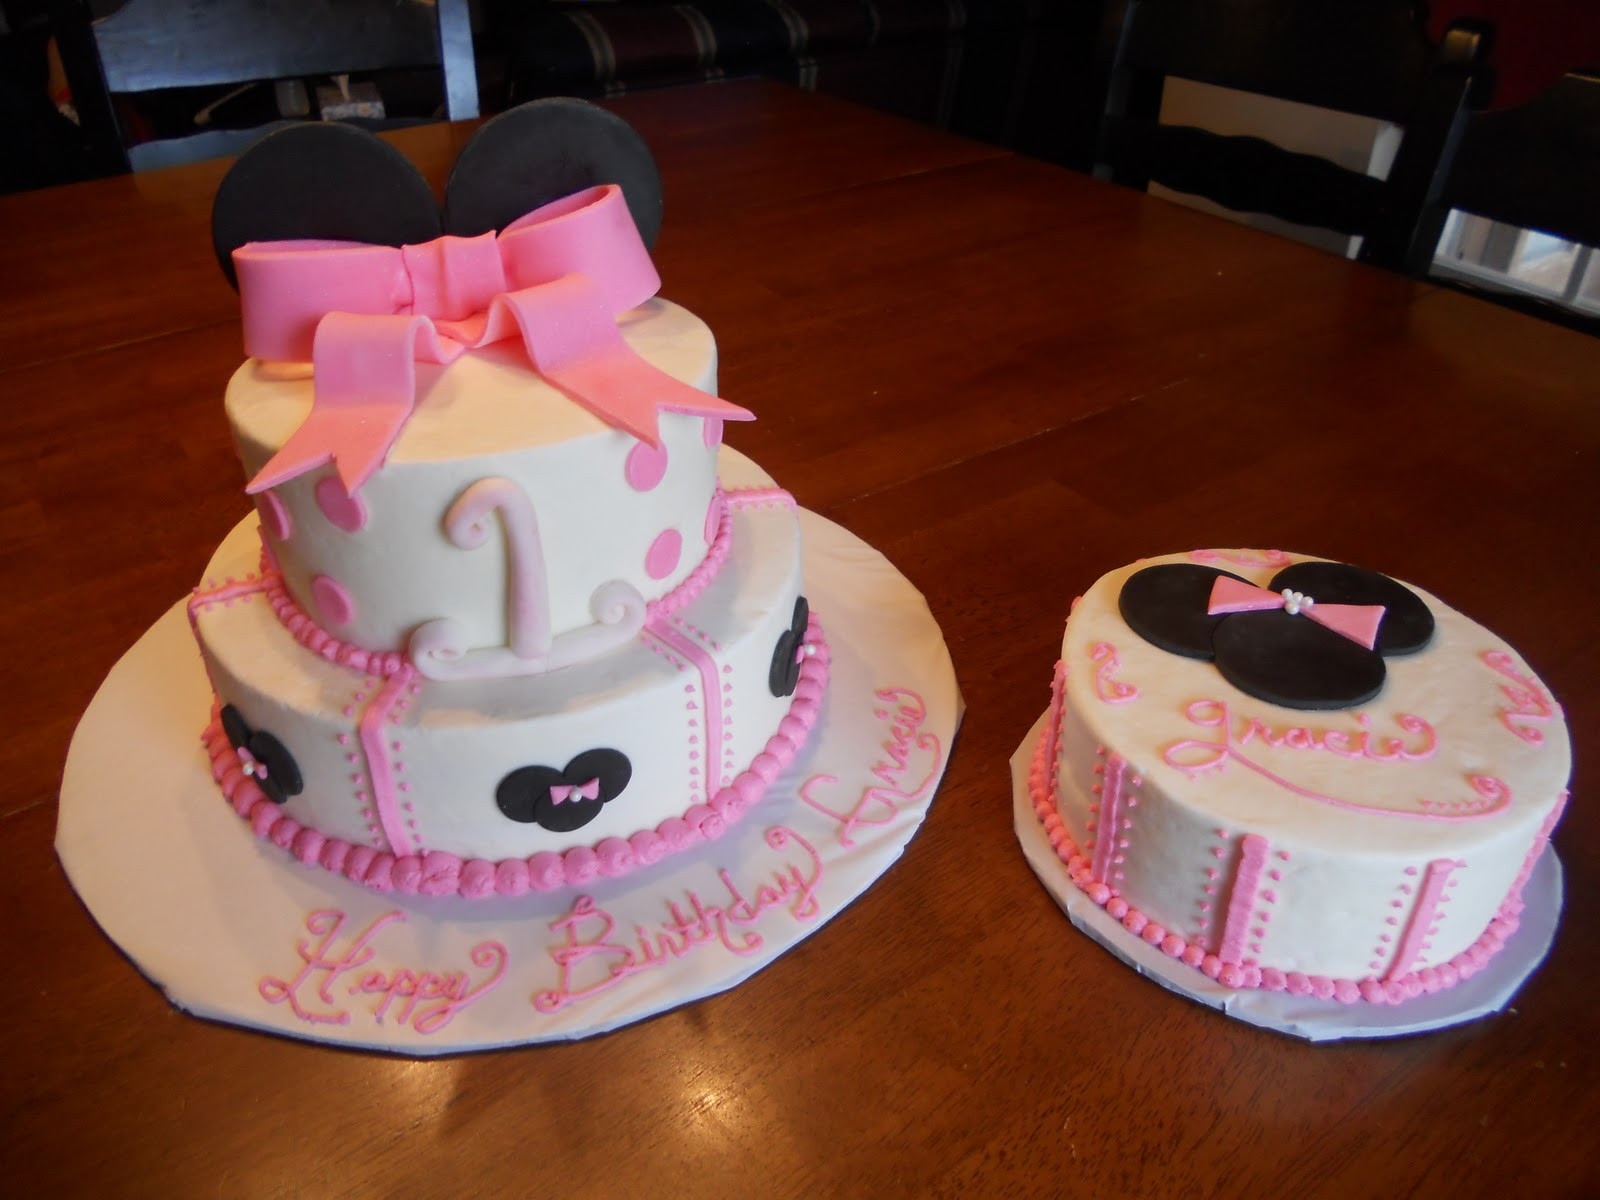 Minnie Mouse 1st Birthday Cakes
 Treat Dreams Minnie Mouse 1st Birthday Cake